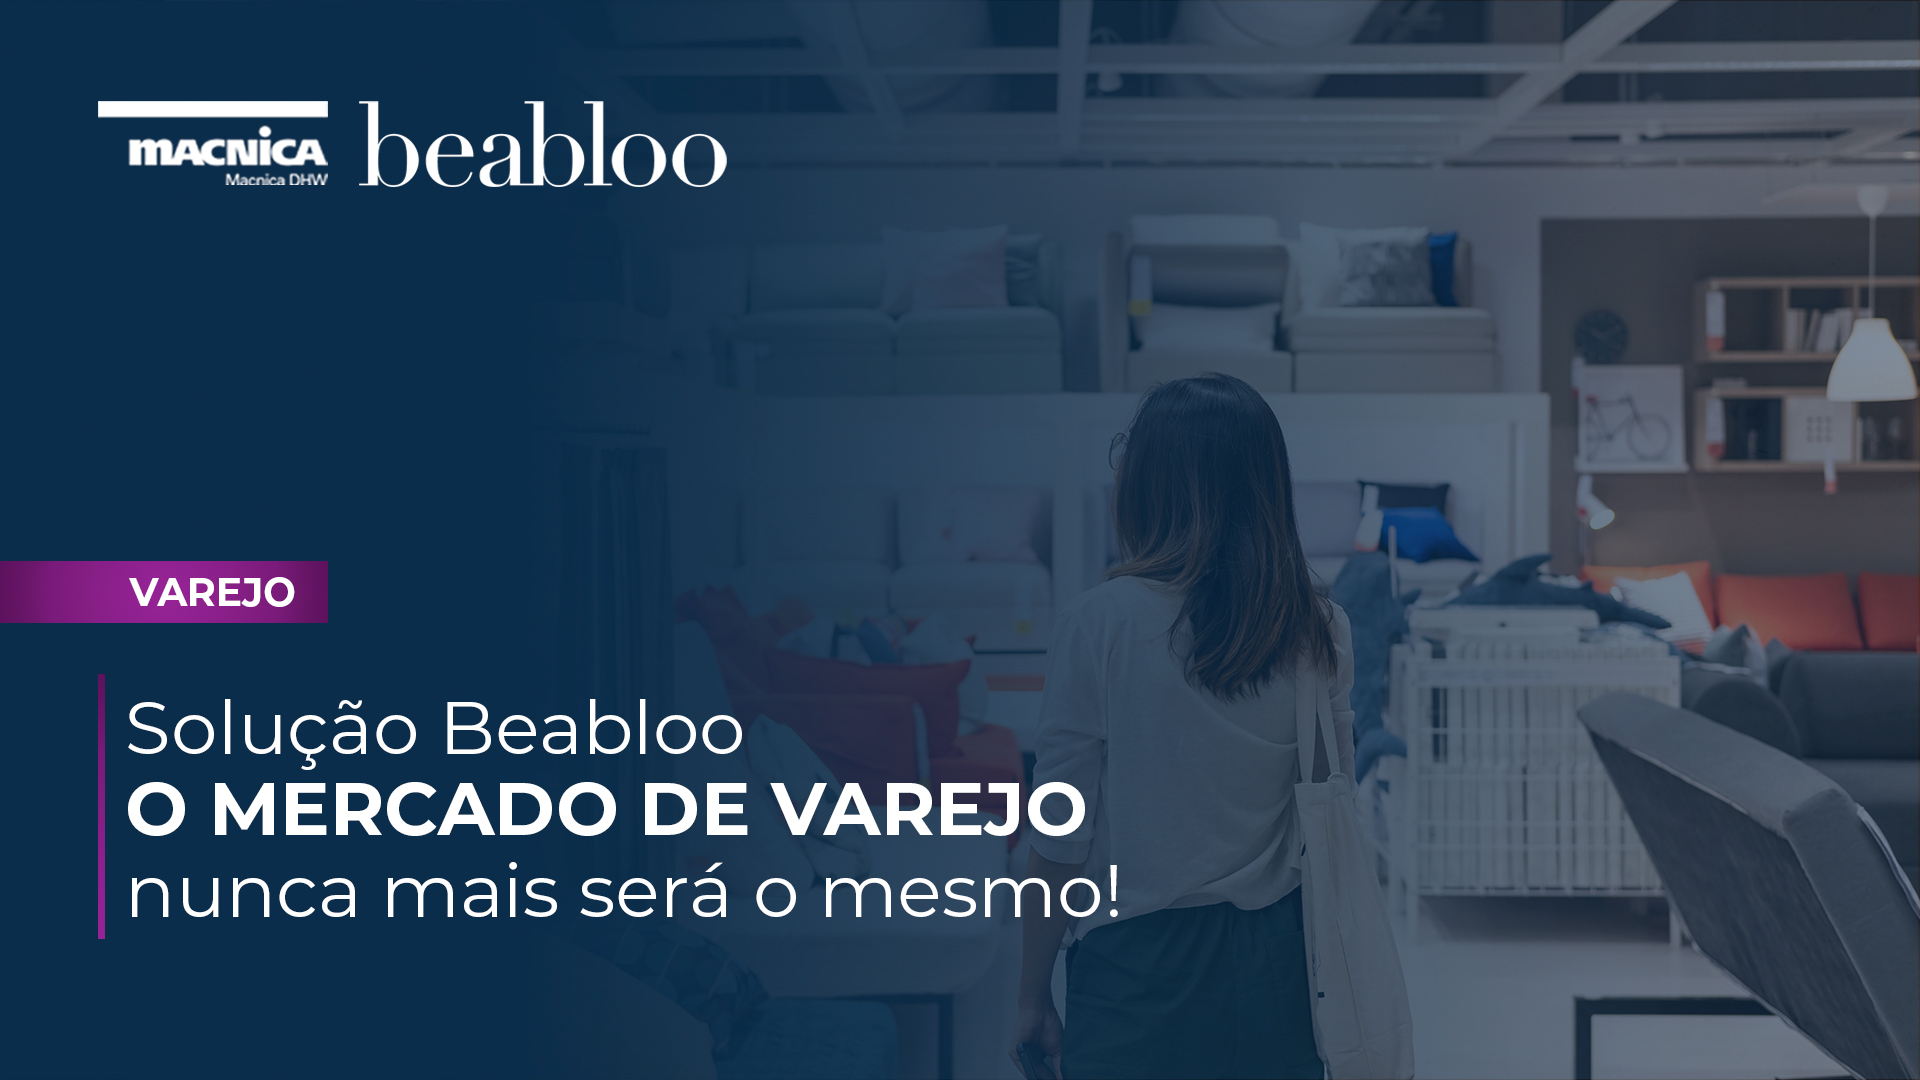 You are currently viewing Beabloo – O mercado de varejo nunca mais será o mesmo